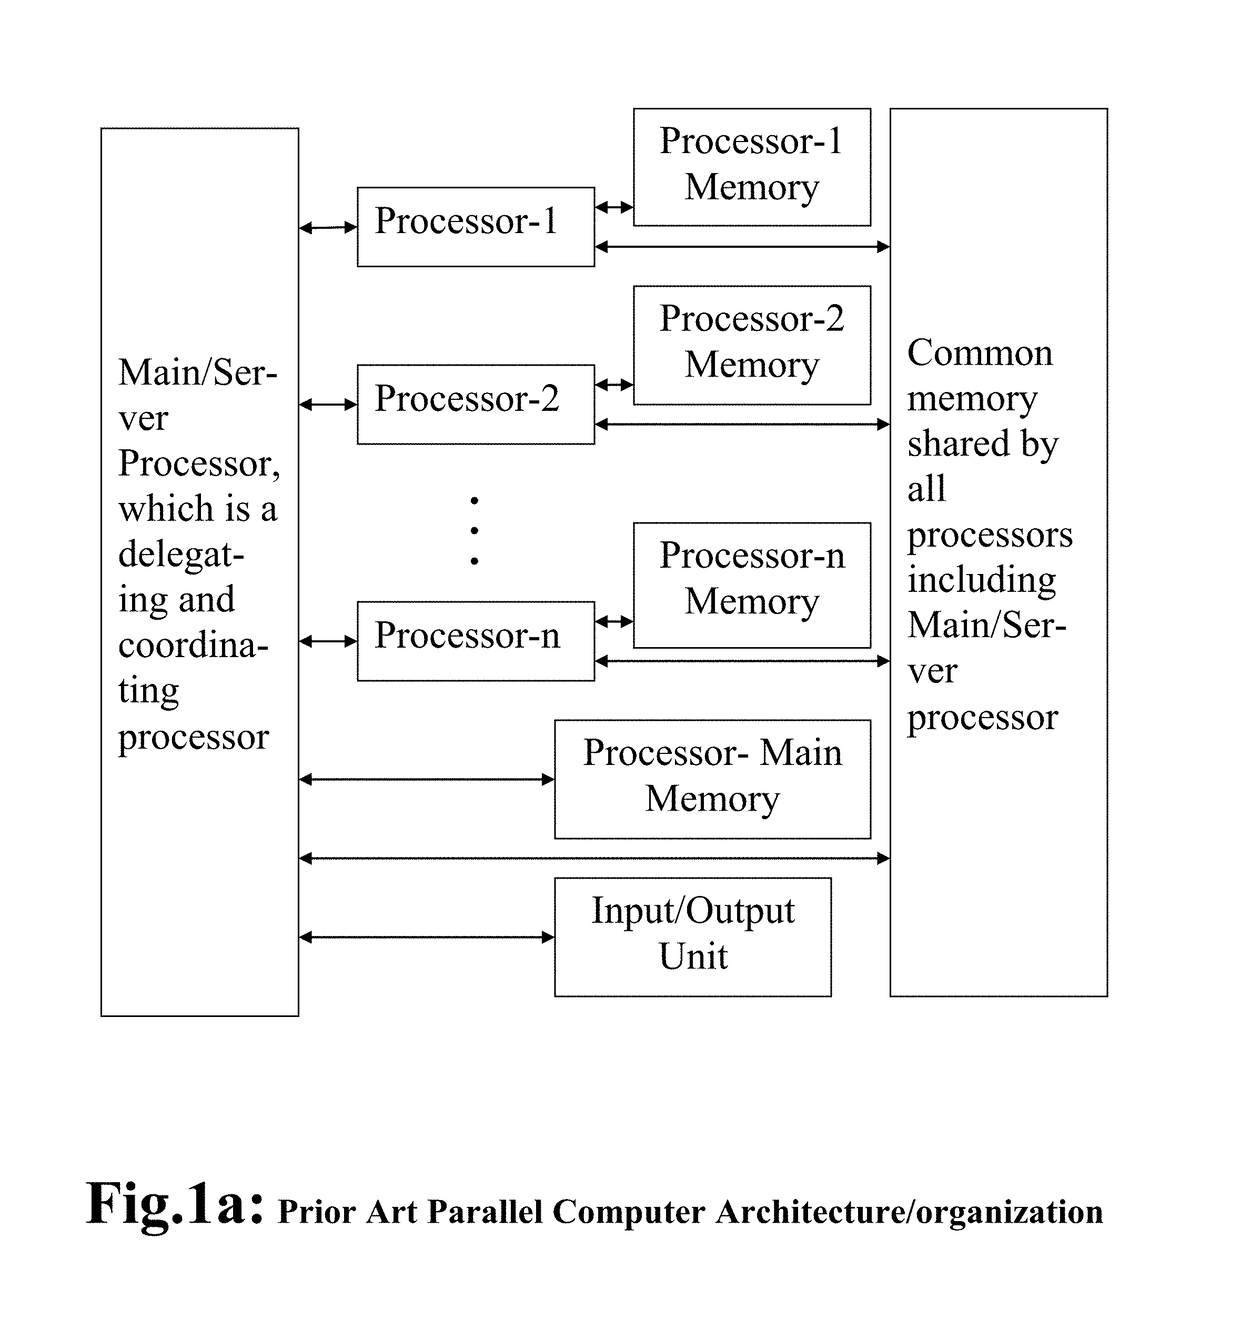 Multiprocessor computing apparatus with wireless interconnect and non-volatile random access memory